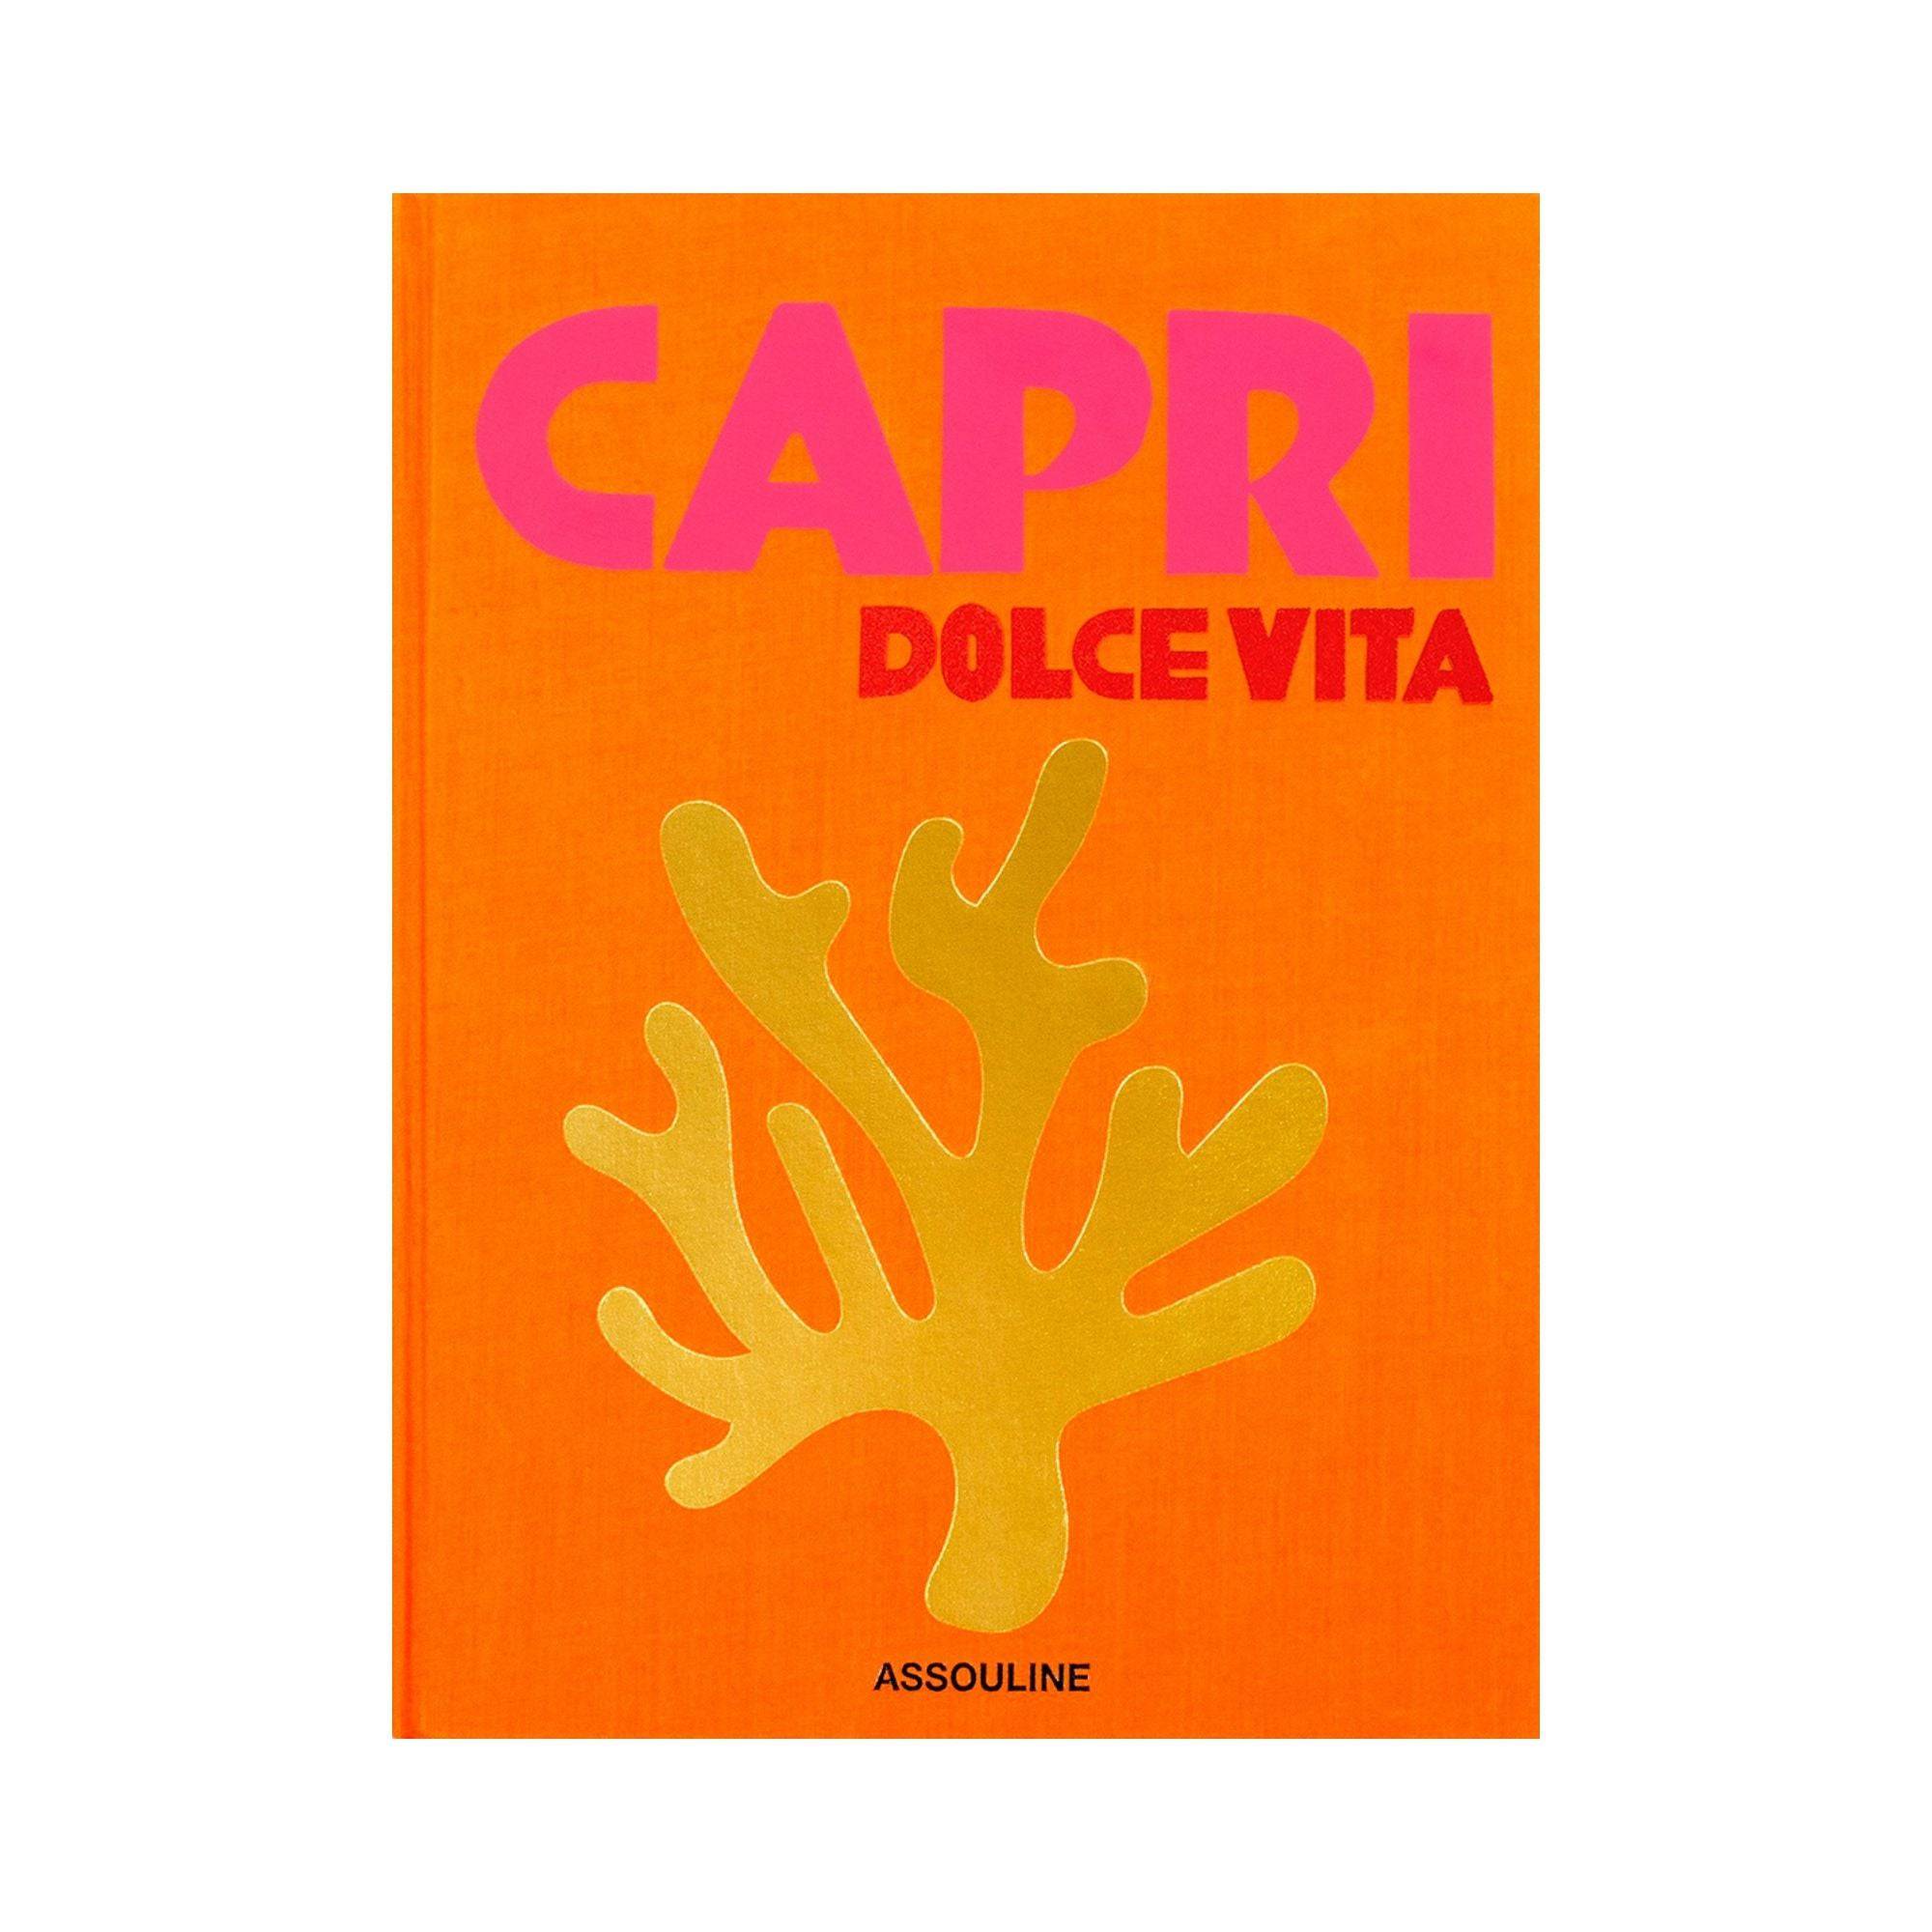 Capri Dolce Vita - THAT COOL LIVING